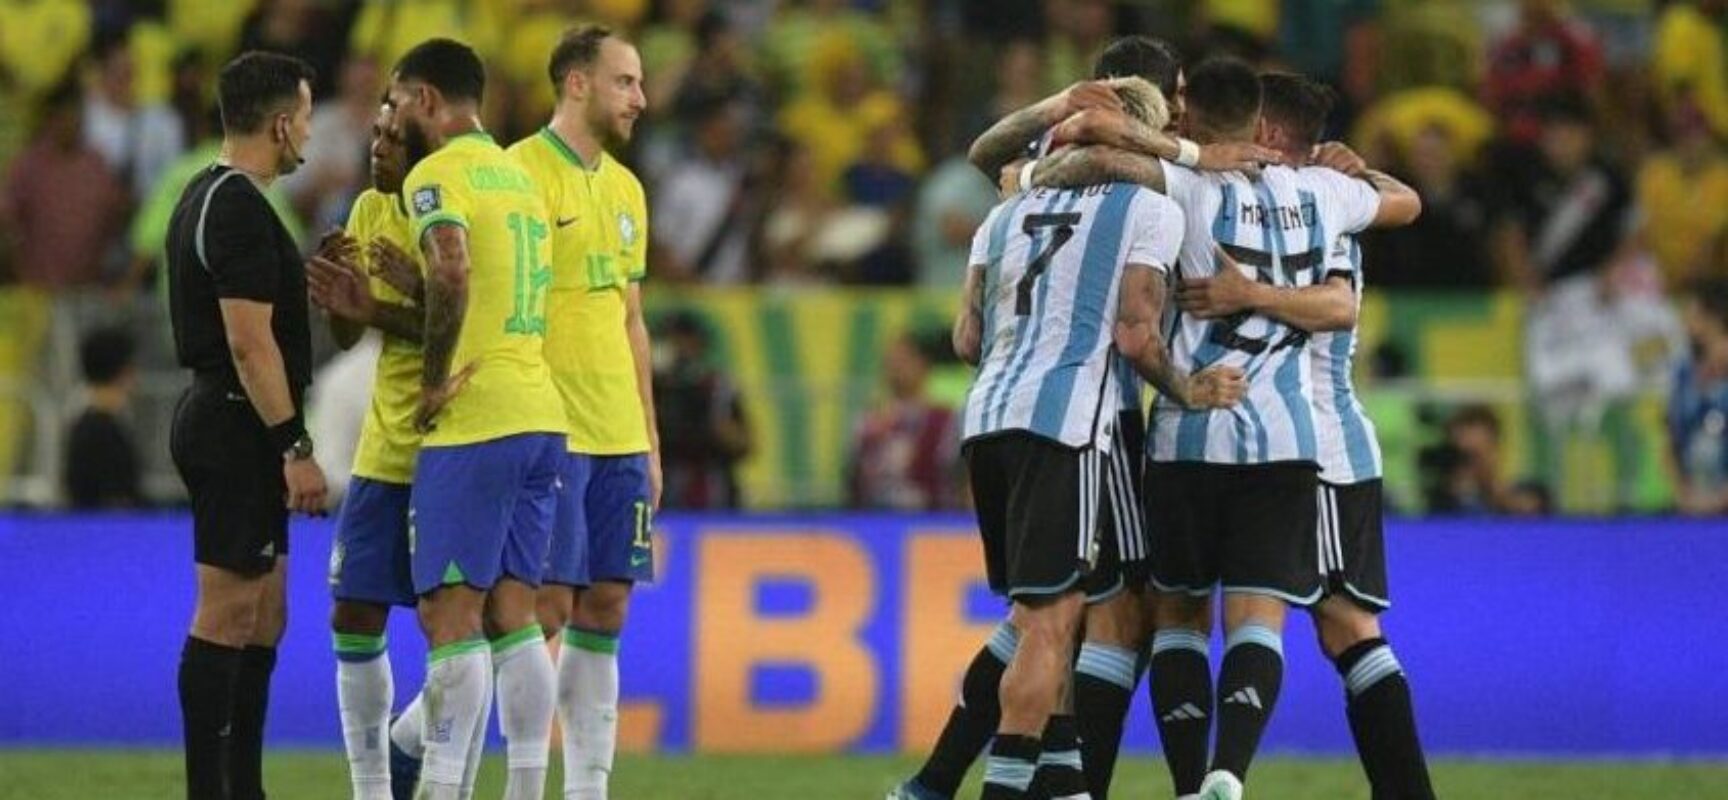 Brasil perde para a Argentina e amarga terceira derrota consecutiva sob o comando de Diniz